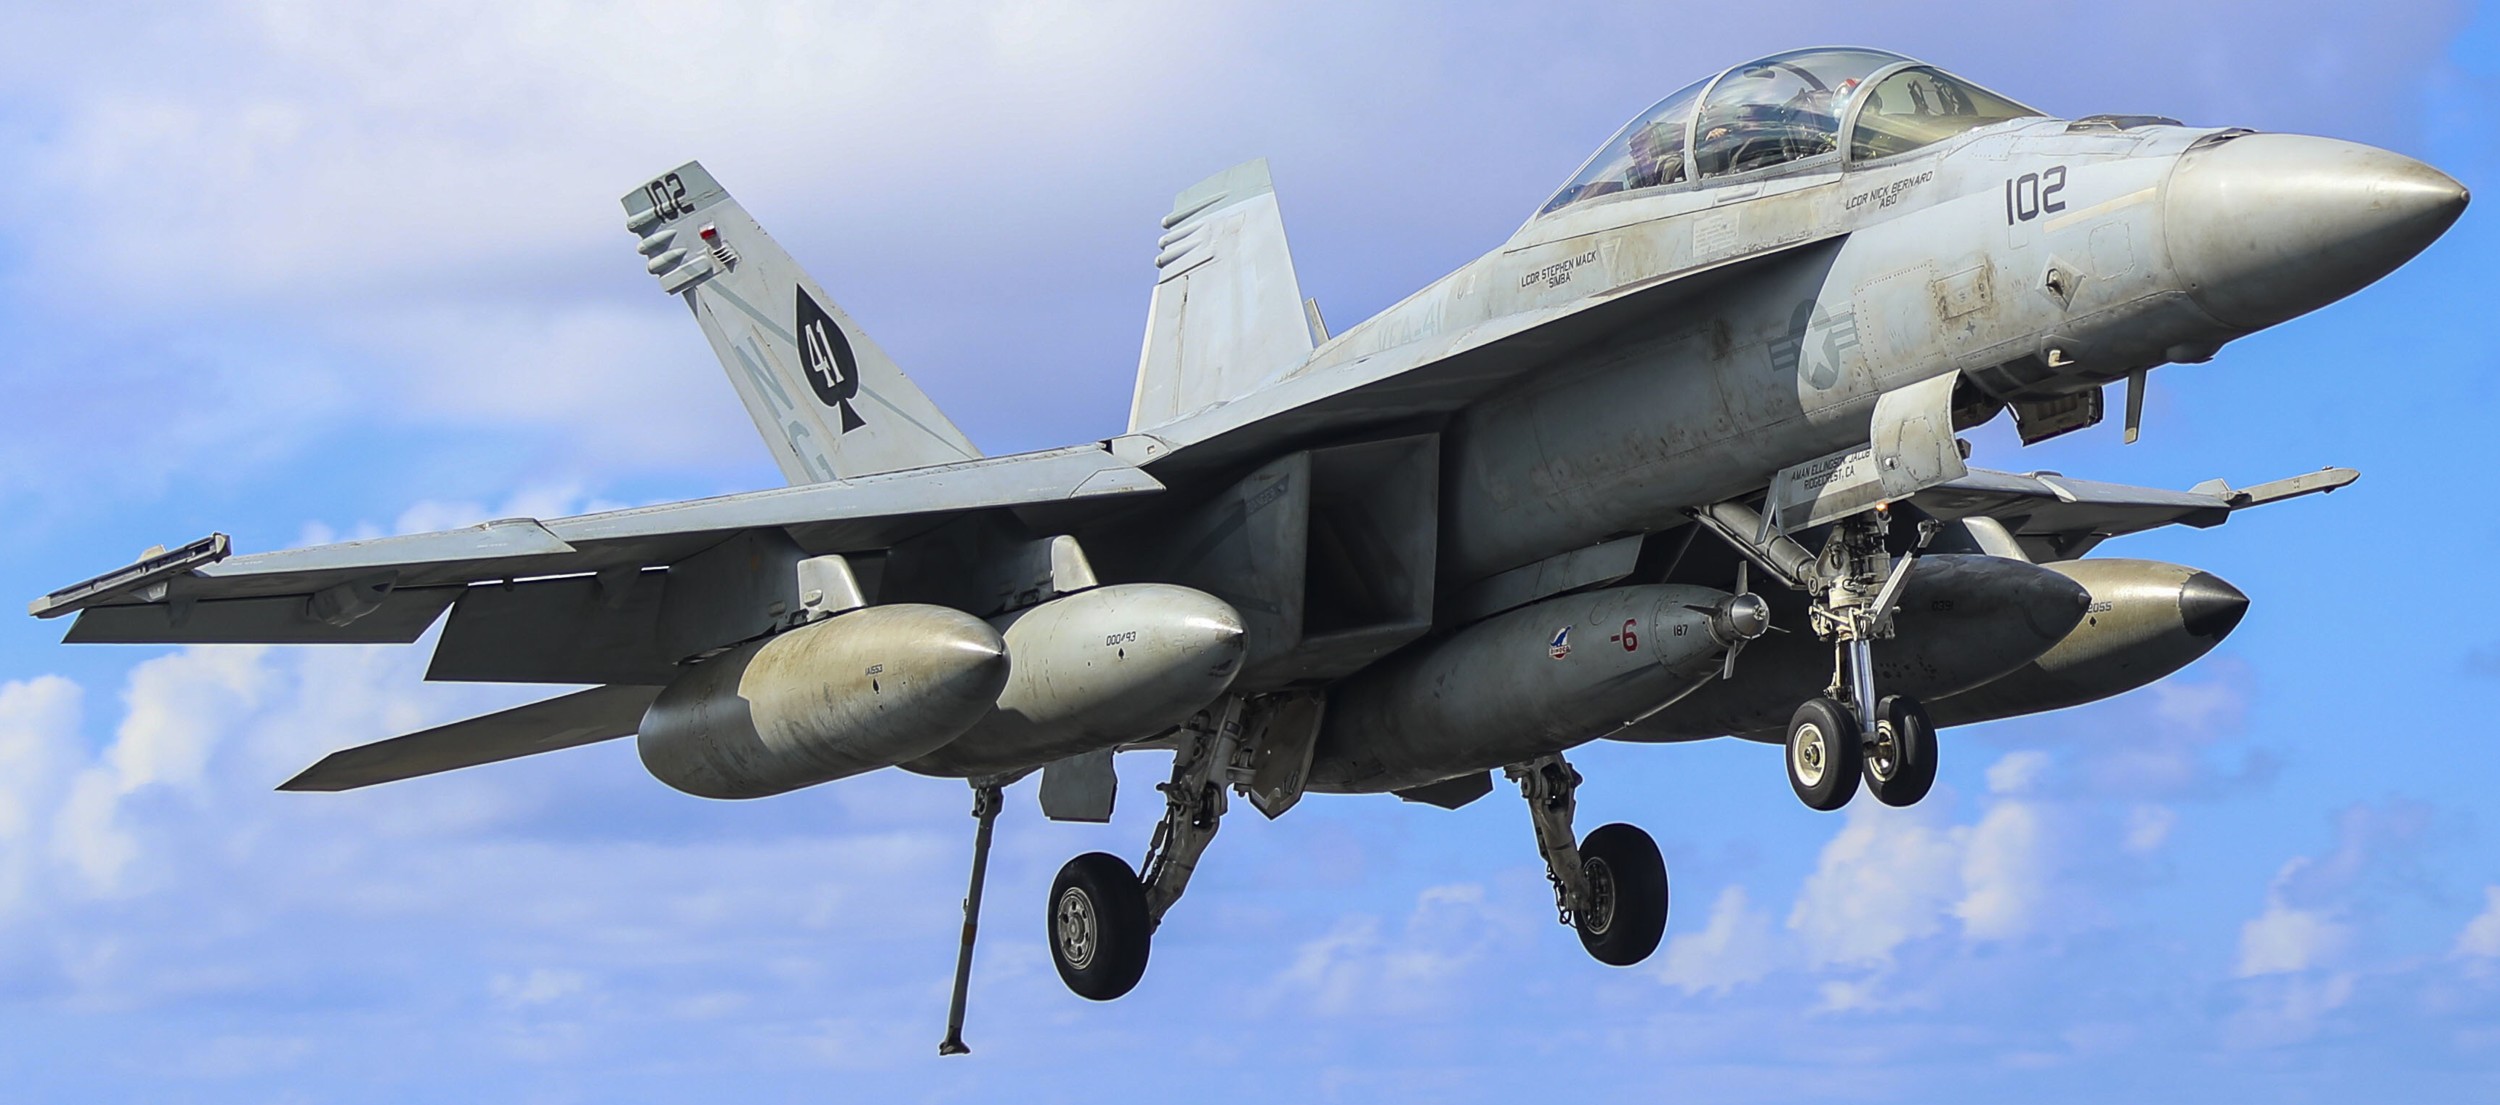 vfa-41 black aces strike fighter squadron f/a-18f super hornet cvw-9 cvn-72 uss abraham lincoln us navy 92